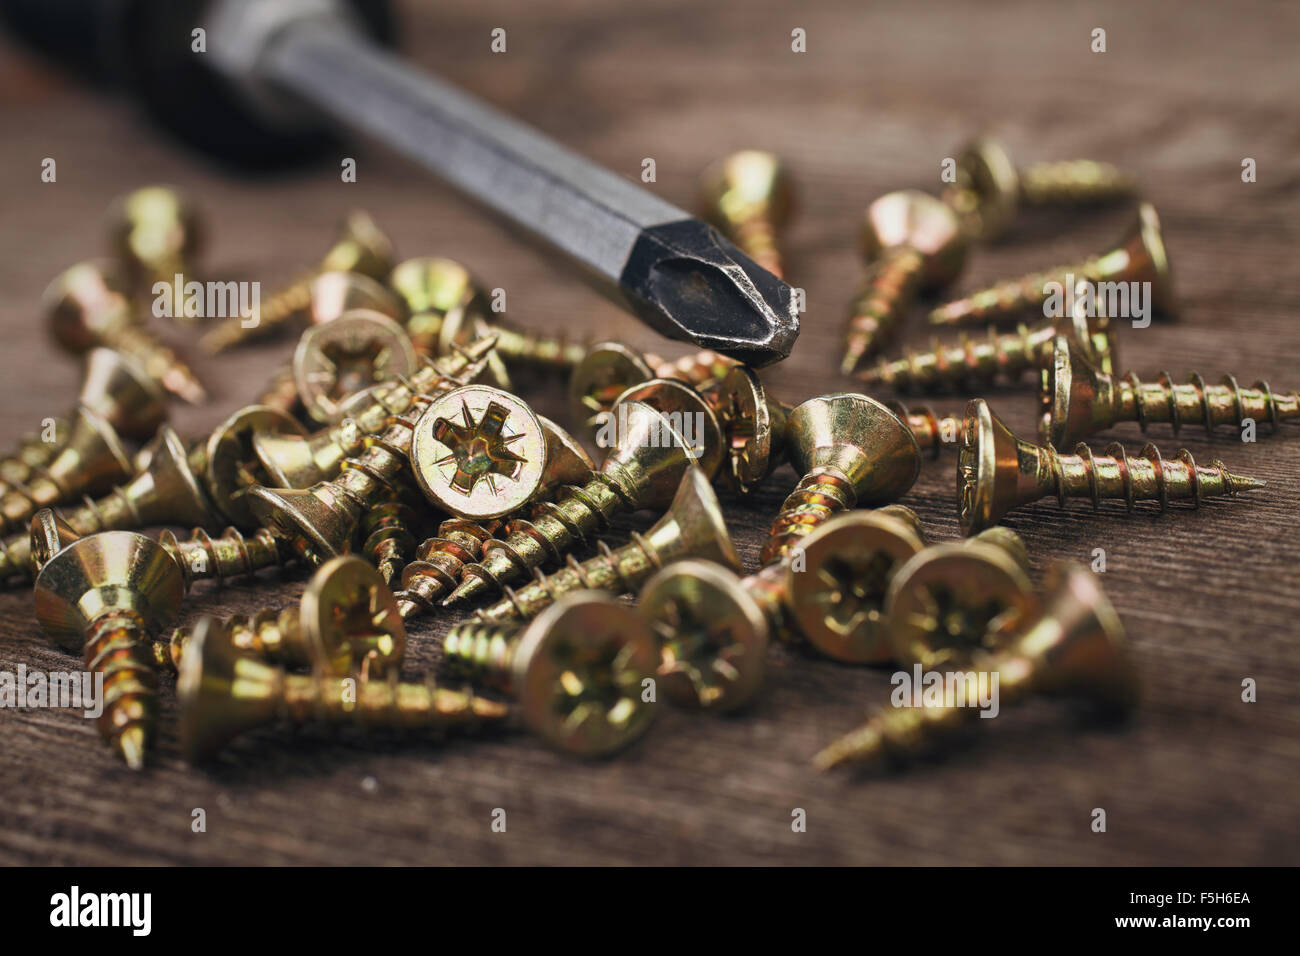 screwdriver and screws Stock Photo